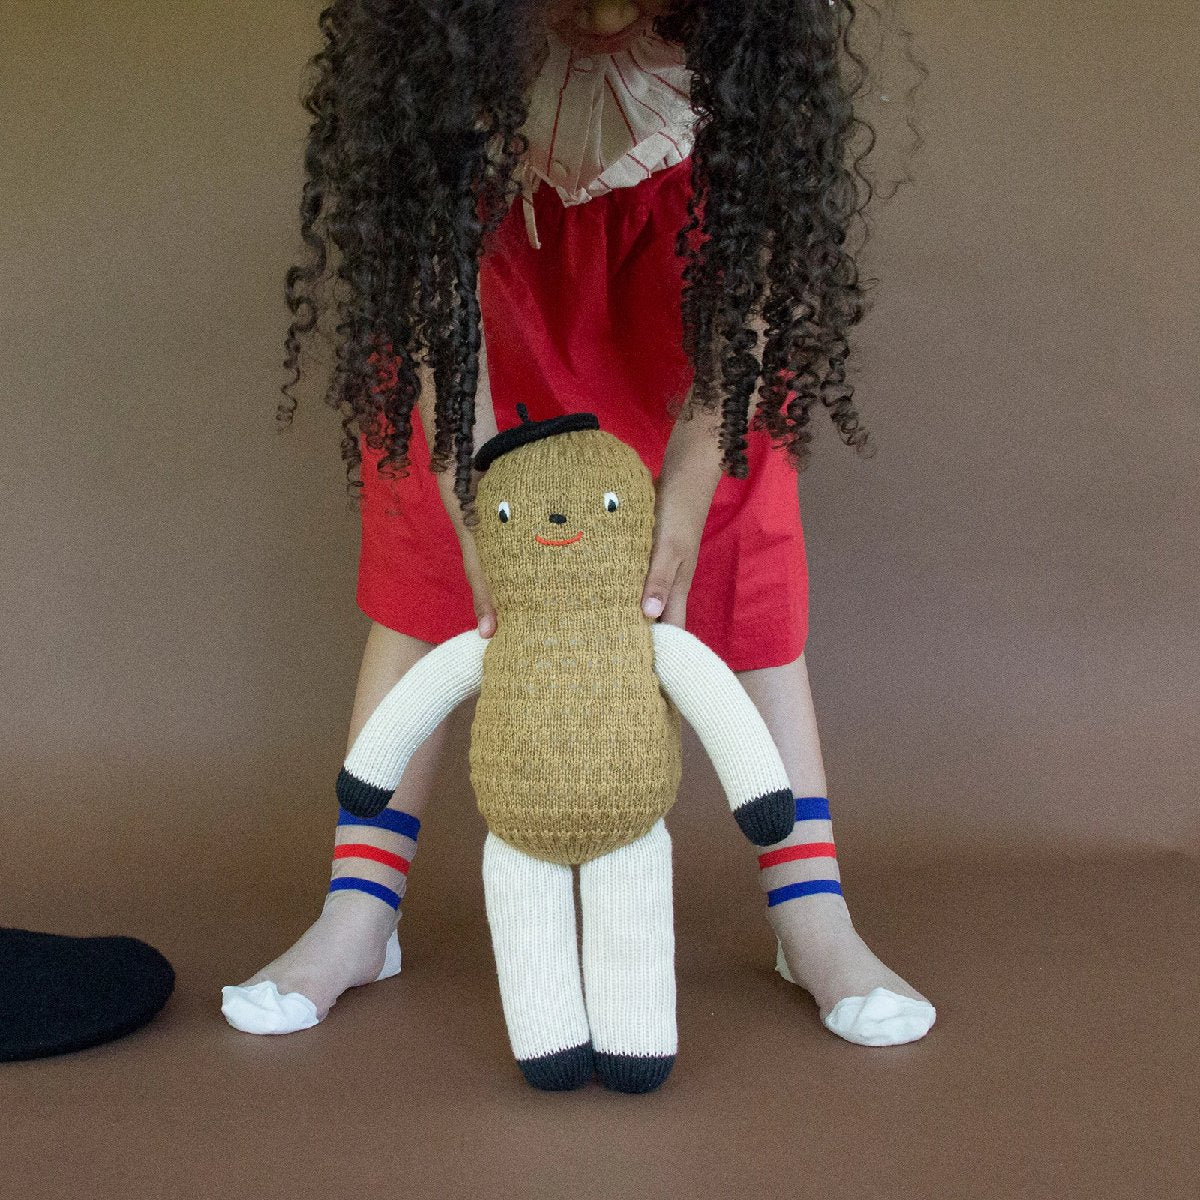 mondocherry - Blabla | "Peanut" cotton doll - hold